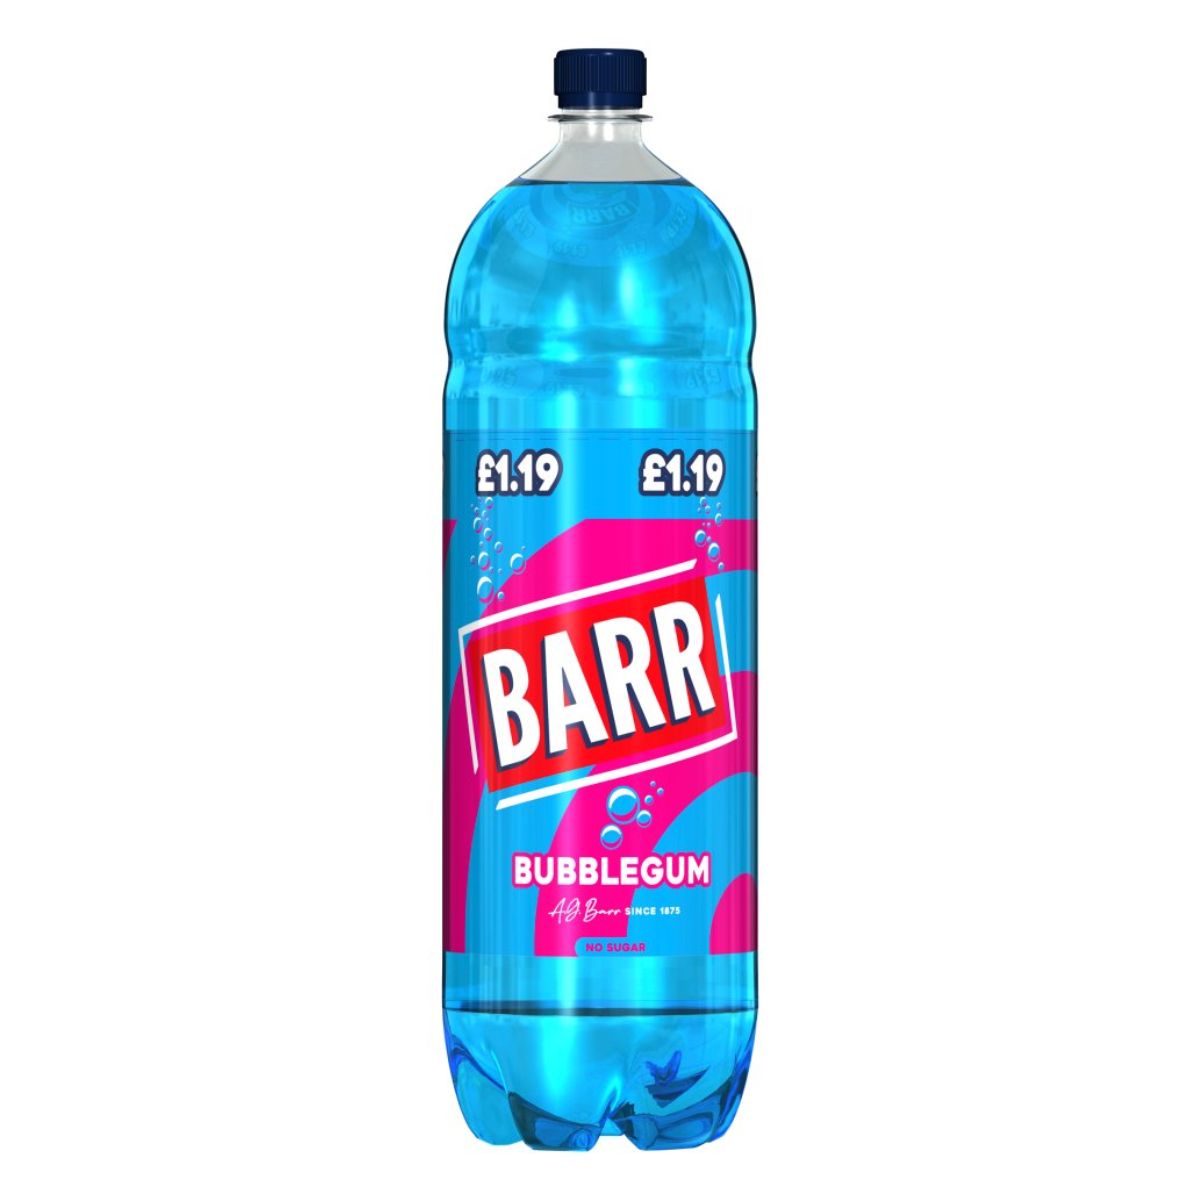 A bottle of Barr - Bubblegum Soft Drink - 2L on a white background.